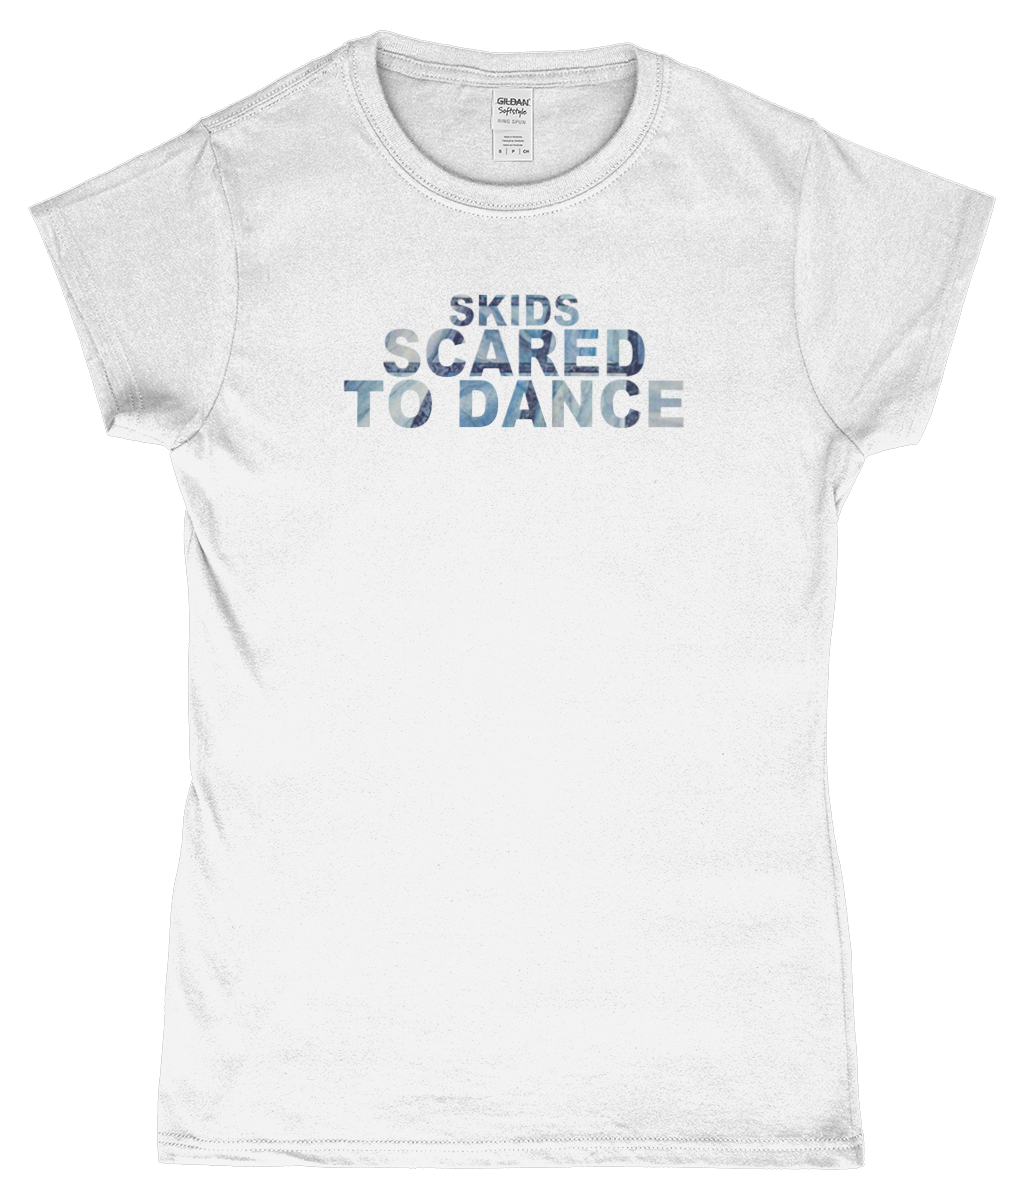 Skids, Scared to Dance, T-Shirt, Women's